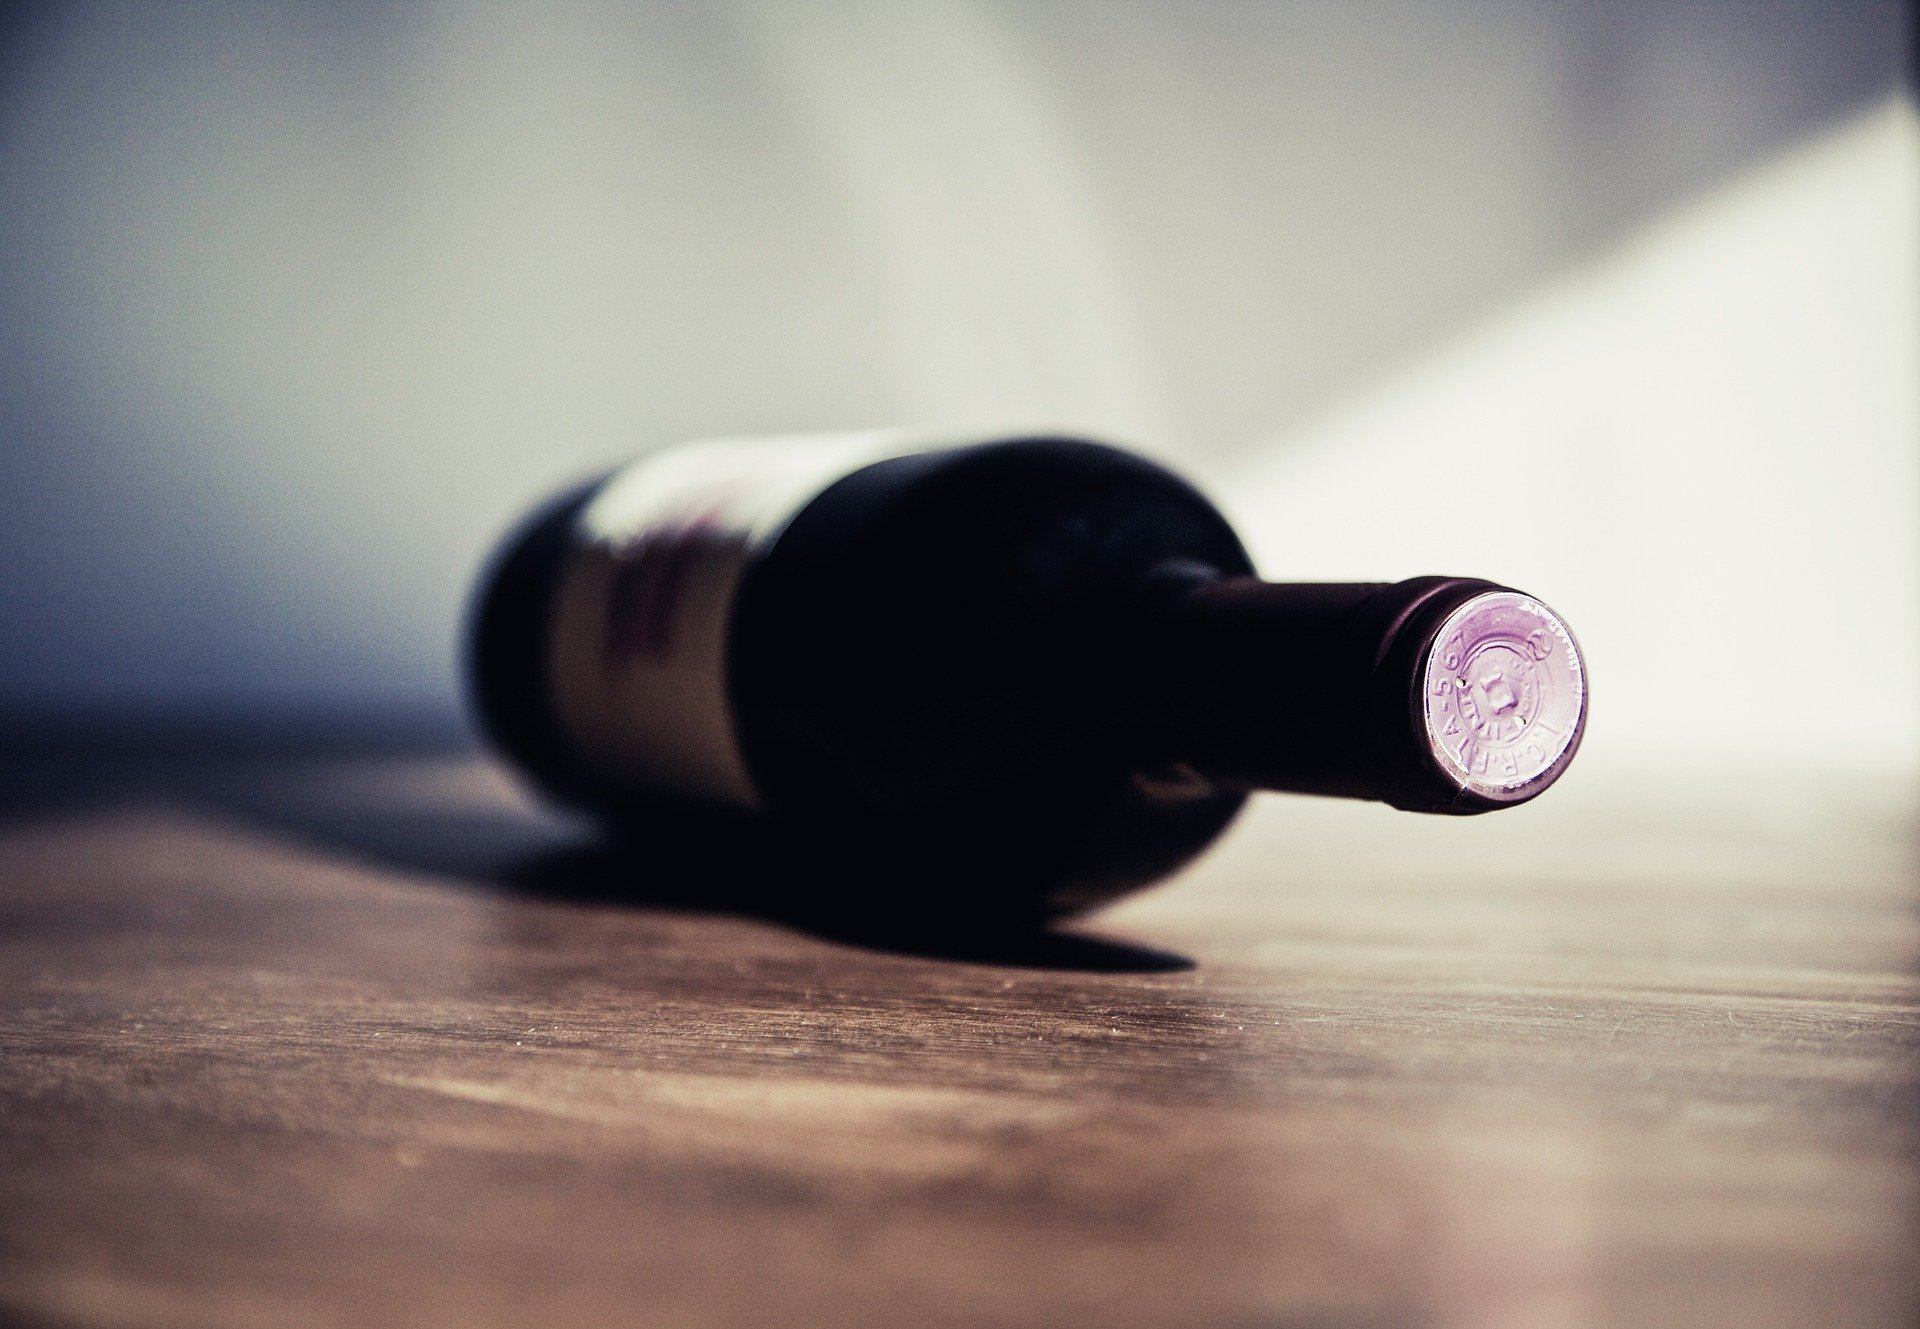 How did the wine bottle survive? | Photo: Pixabay/Markus Spiske